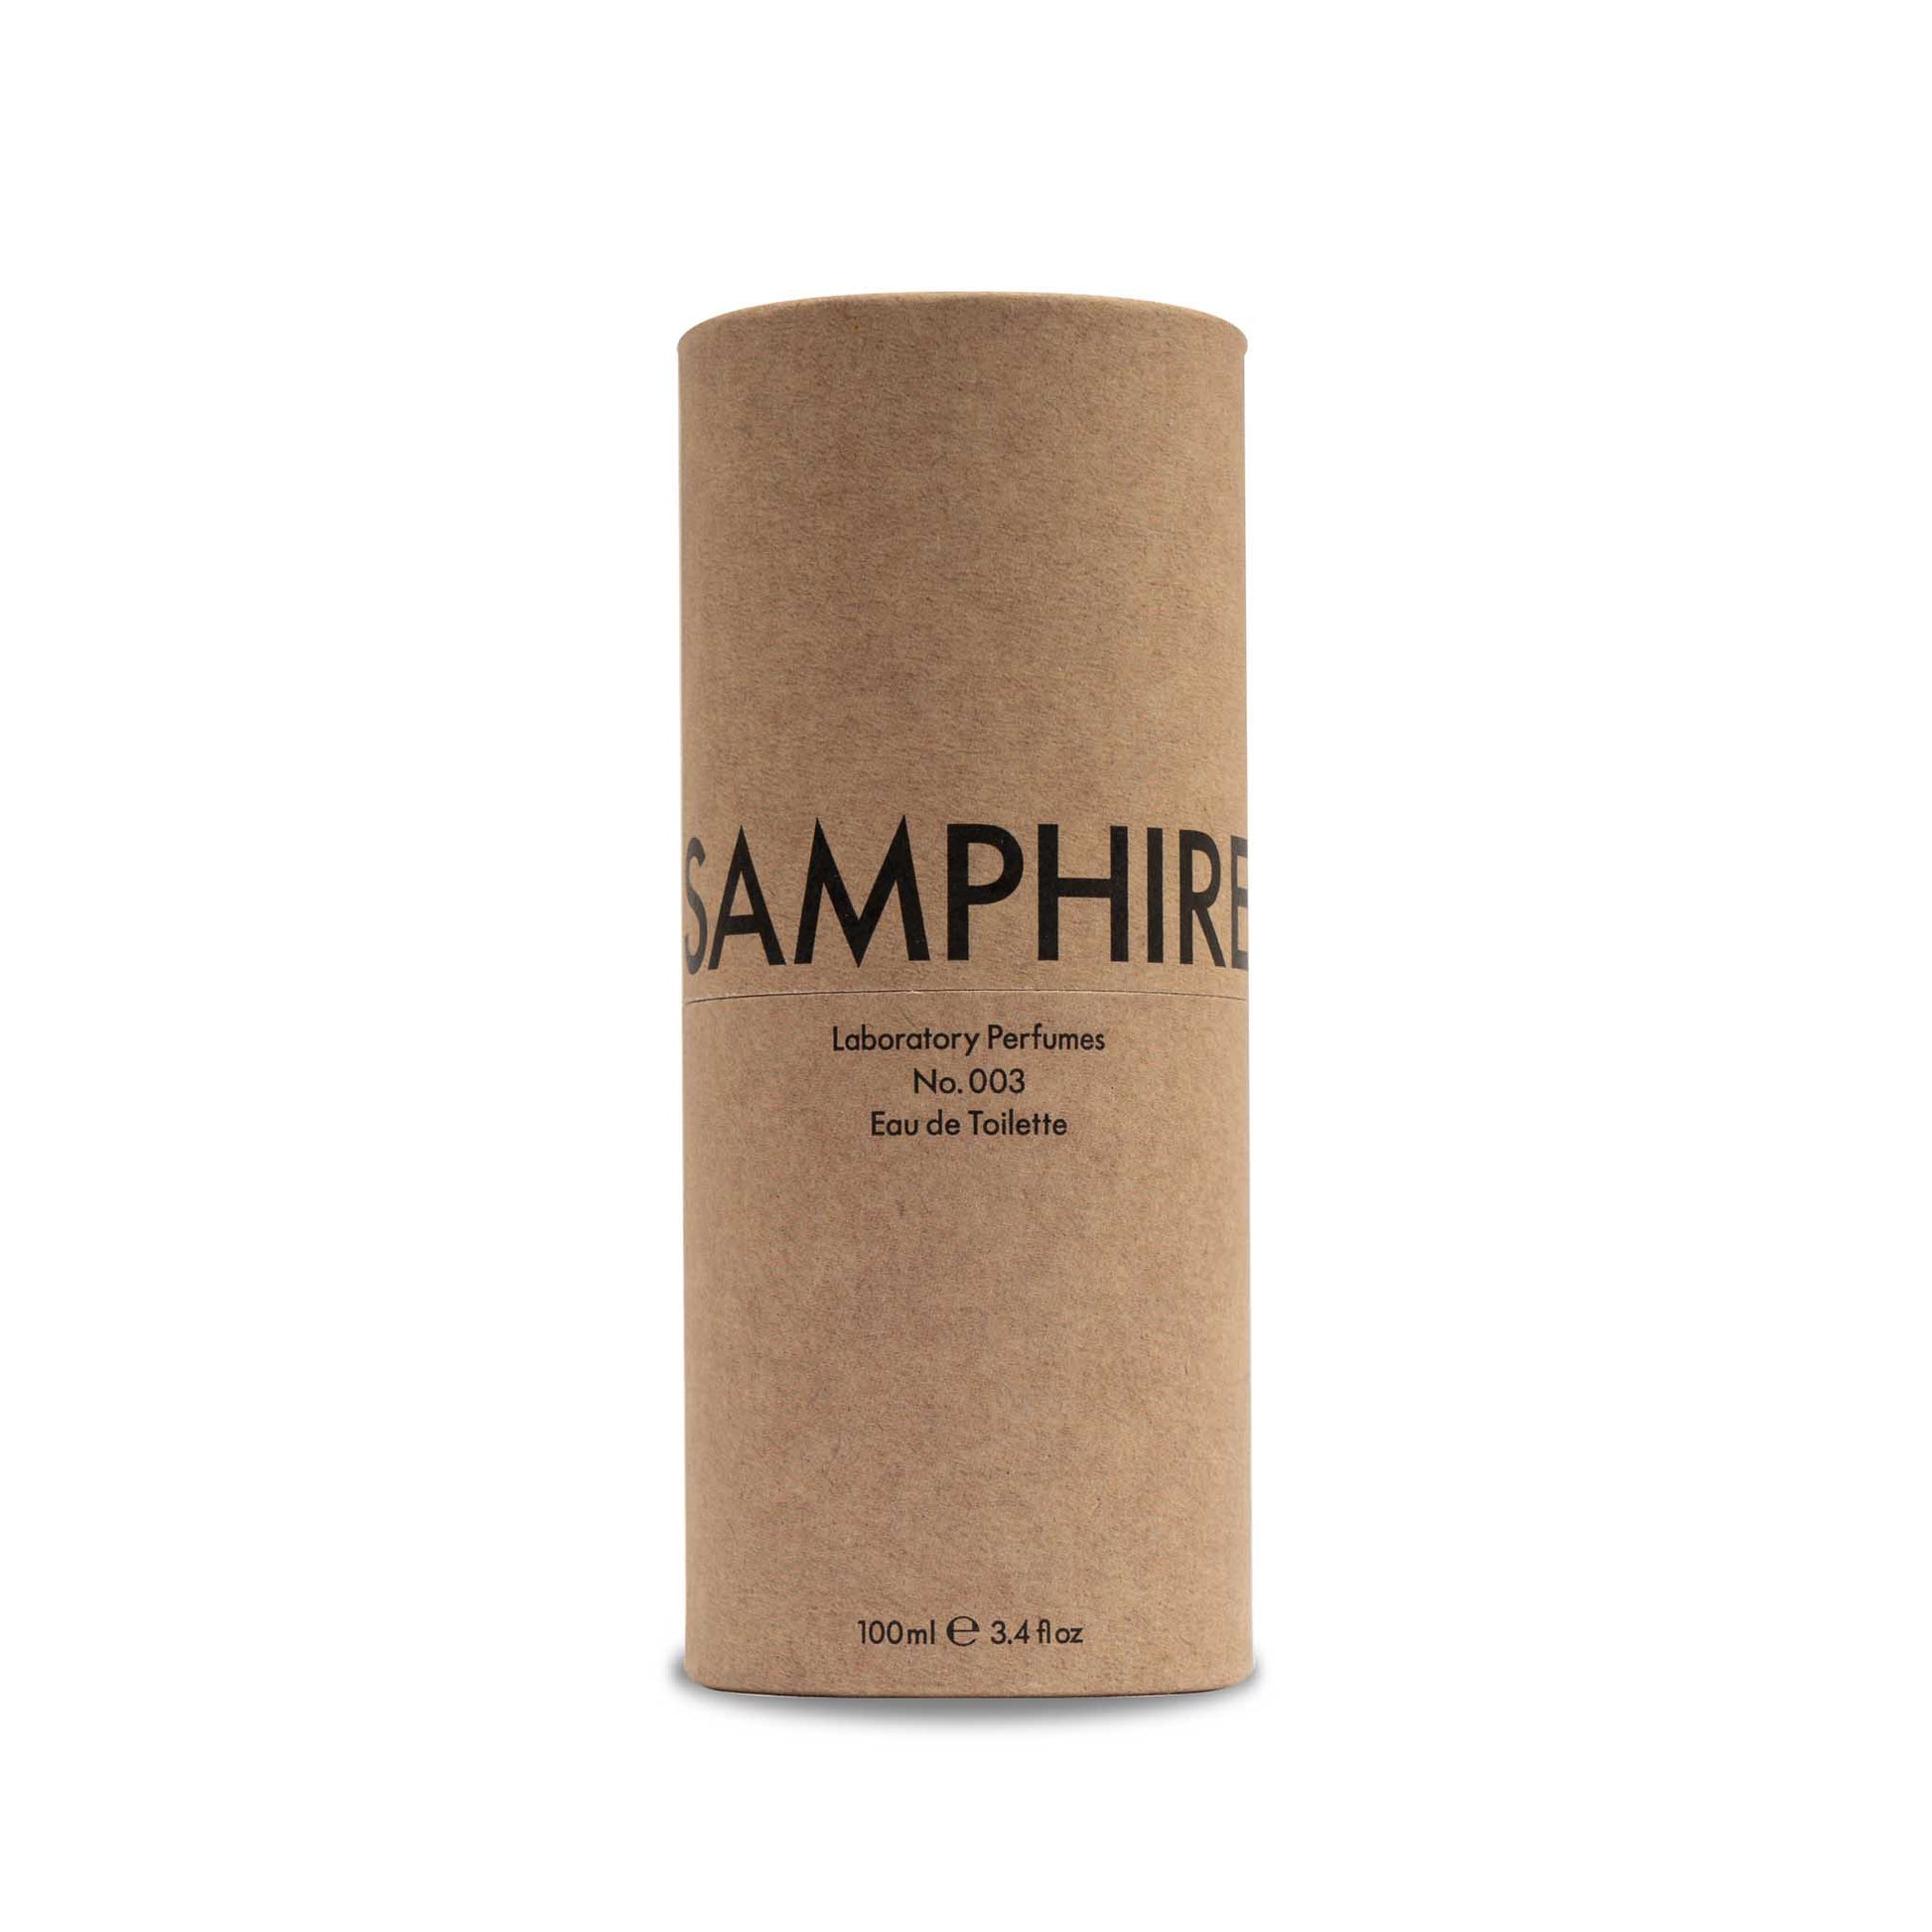 Samphire Eau de Toilette Laboratory Perfumes